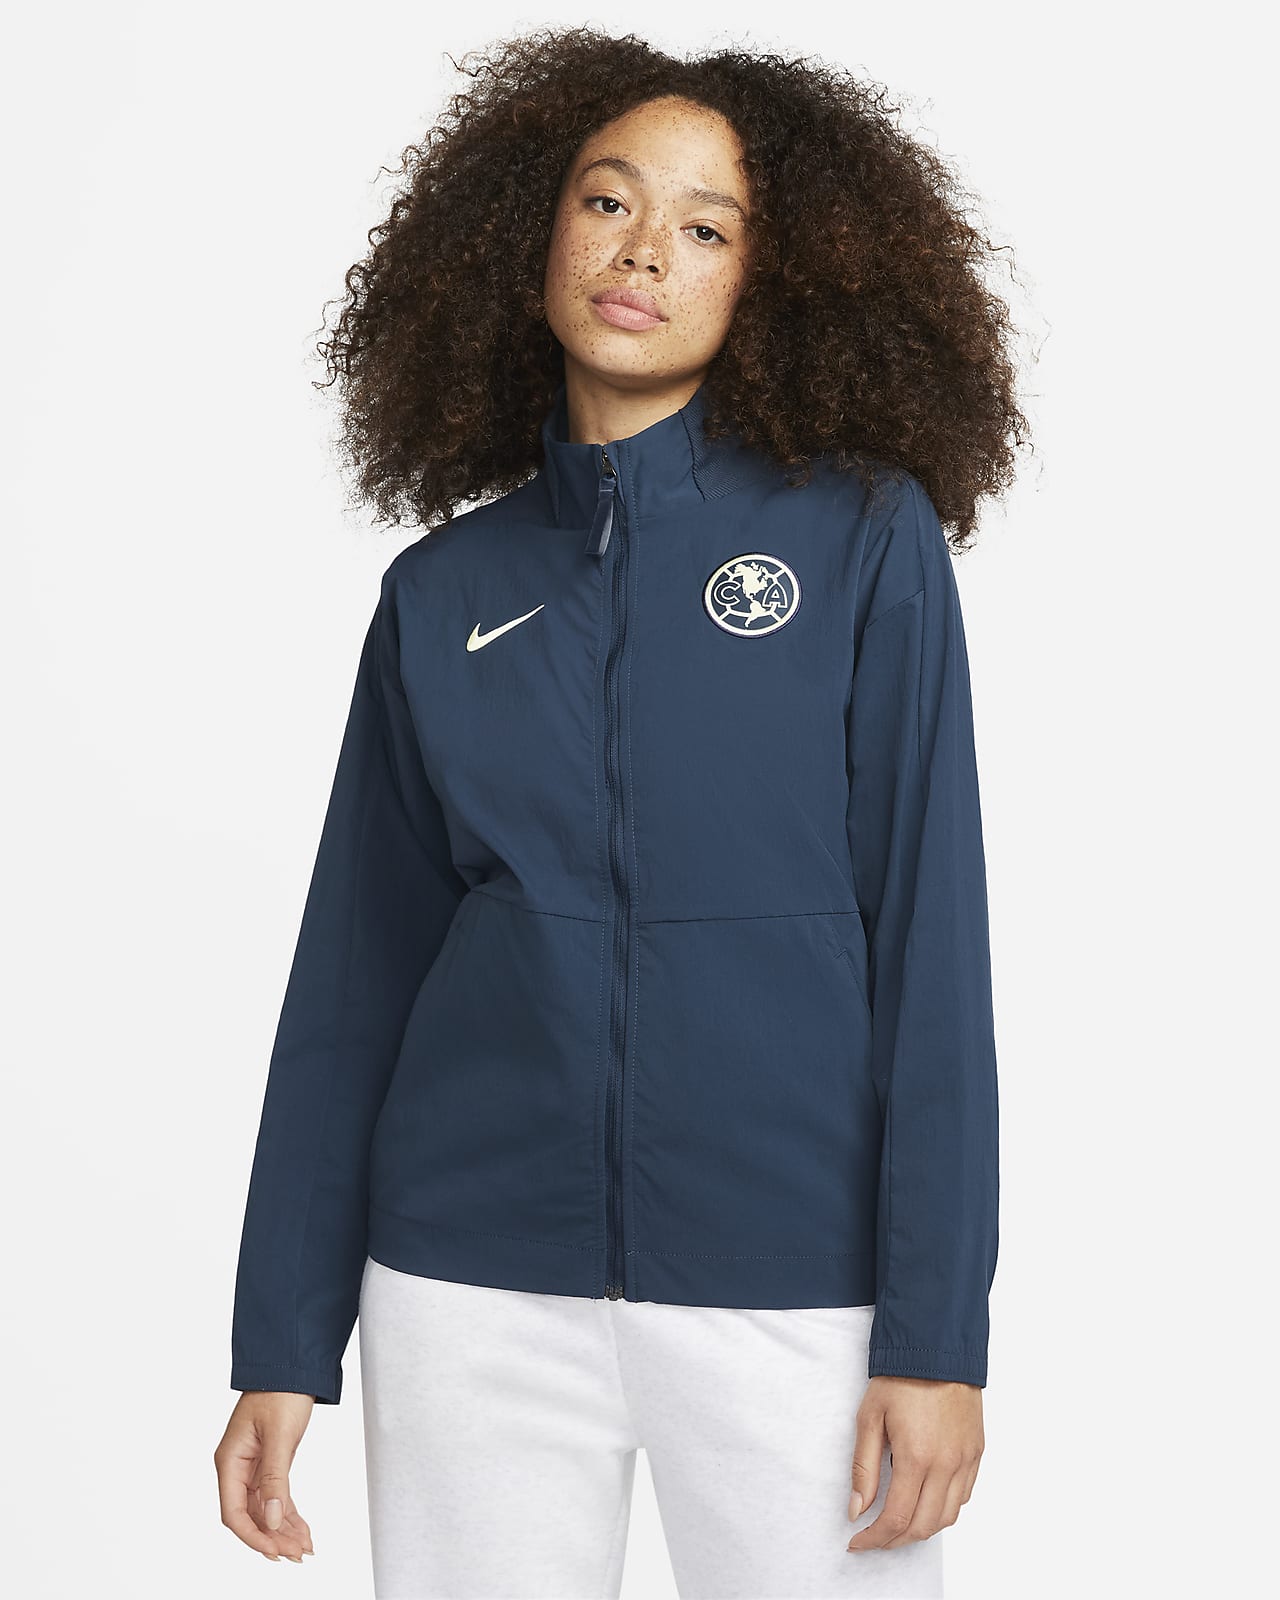 Club América Women's Nike Dri-FIT Soccer Jacket